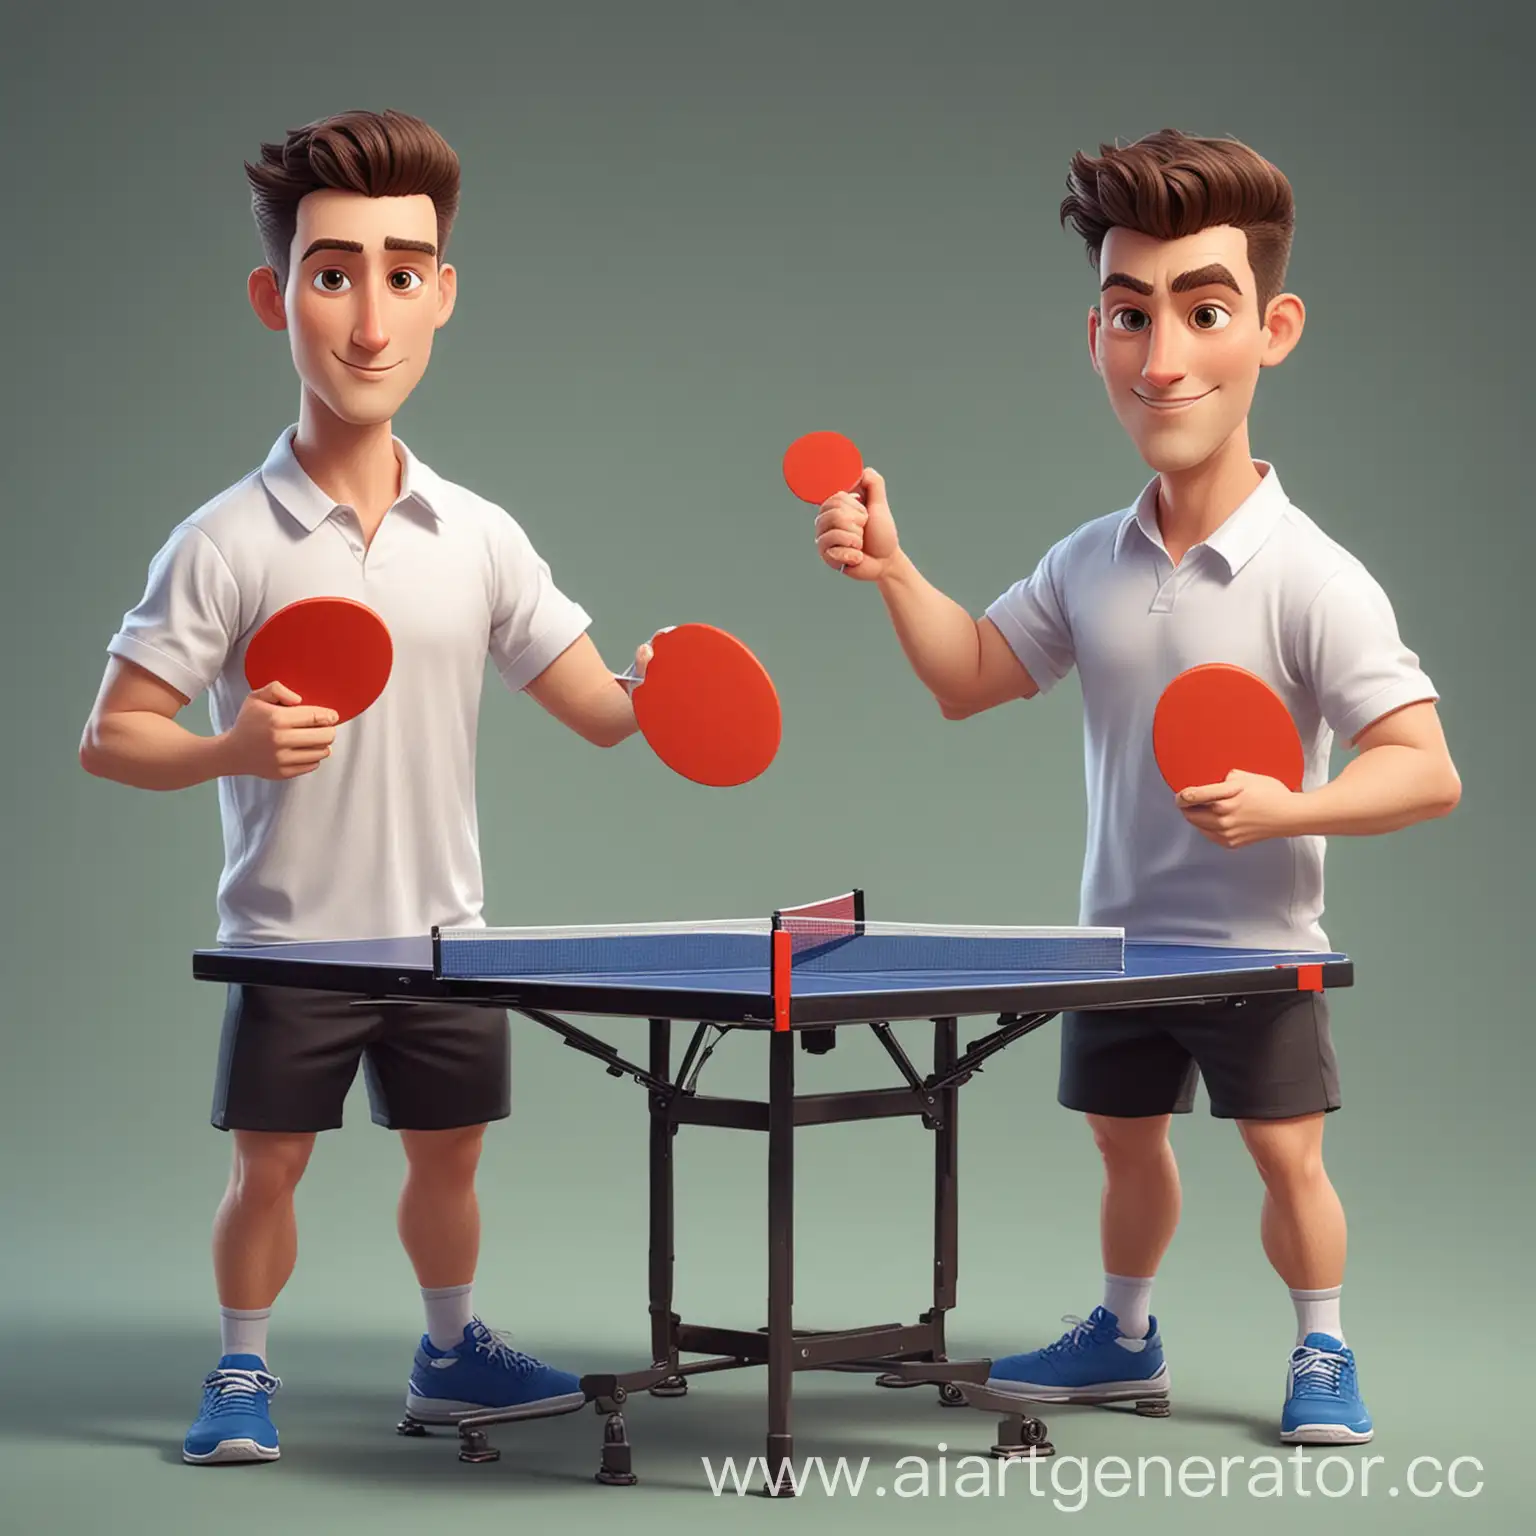 Dynamic-Cartoon-Men-Engage-in-Table-Tennis-Match